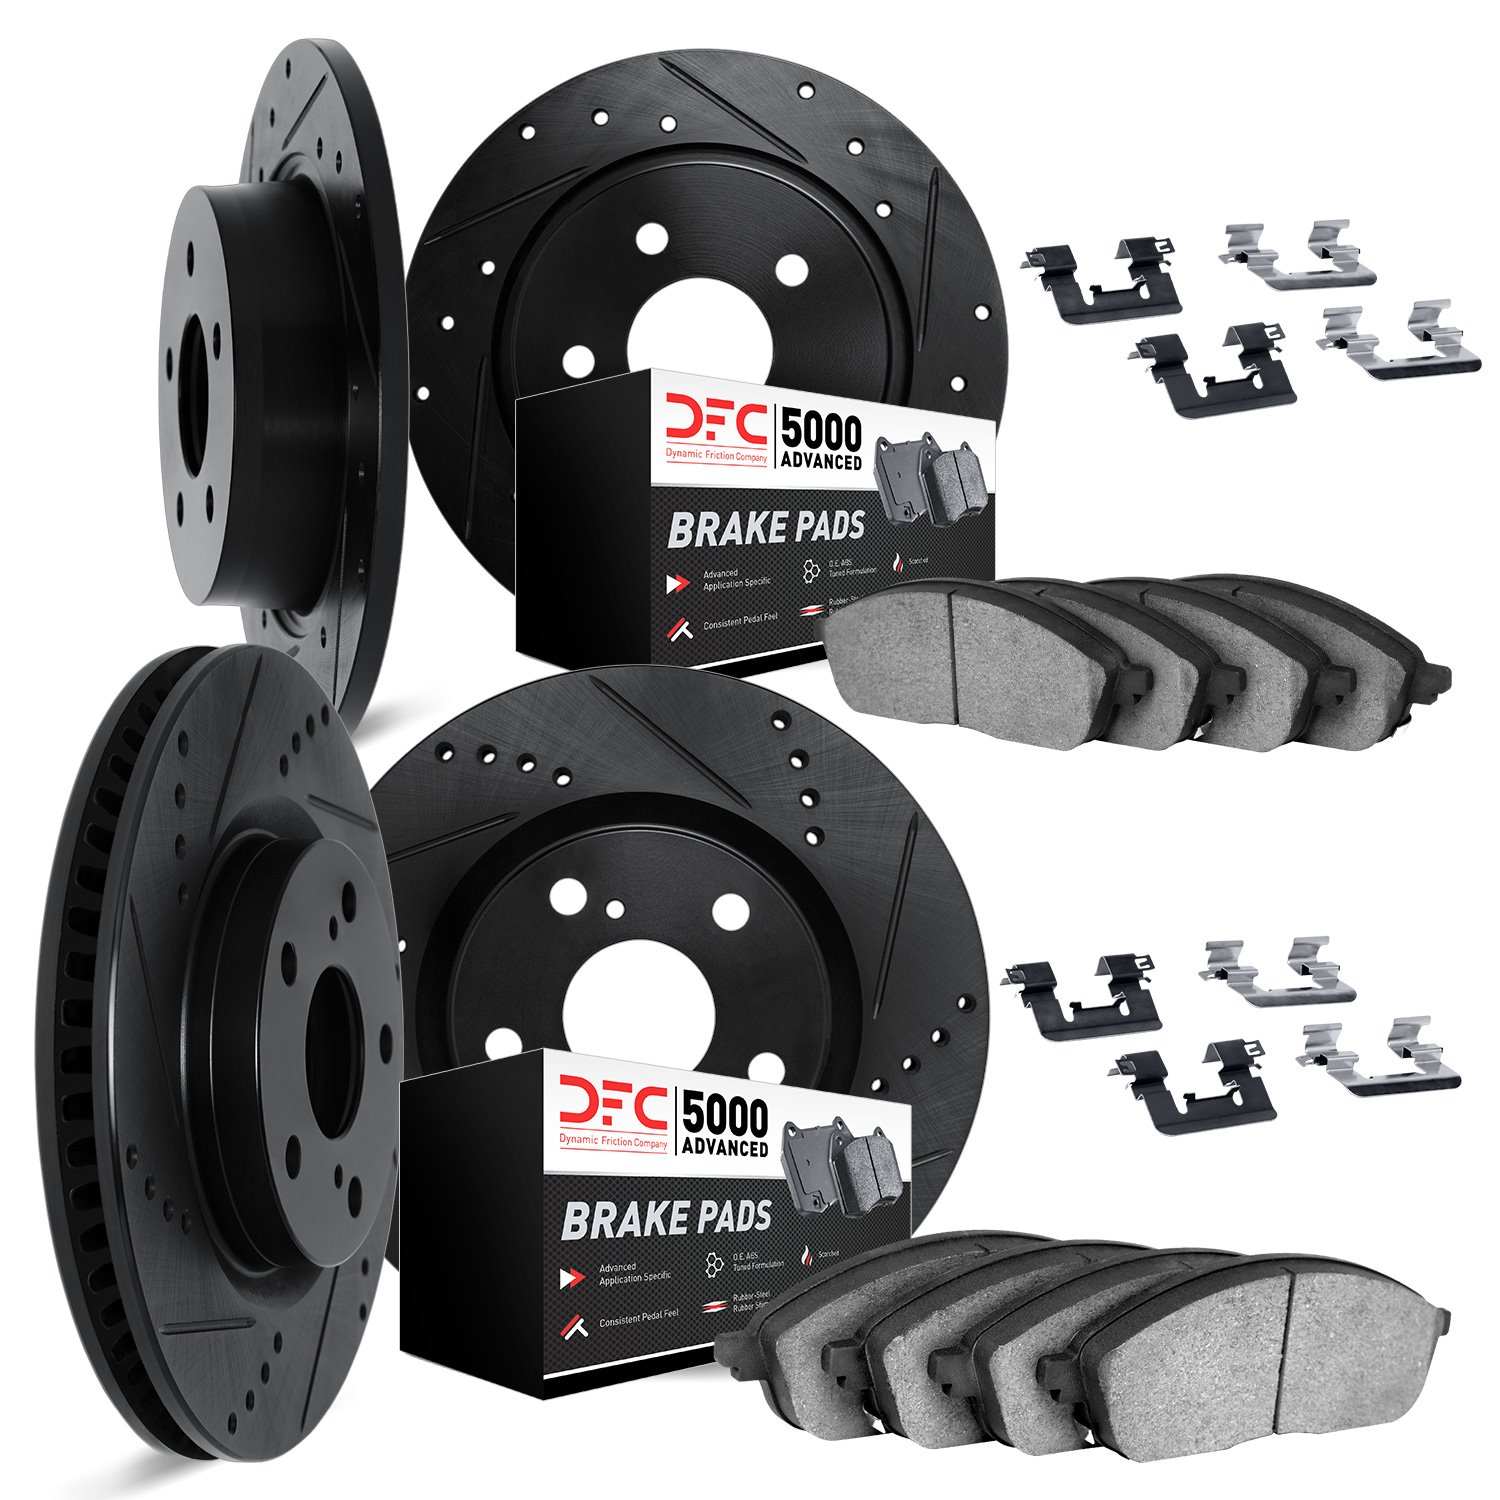 8514-54119 Drilled/Slotted Brake Rotors w/5000 Advanced Brake Pads Kit & Hardware [Black], 2015-2020 Ford/Lincoln/Mercury/Mazda,